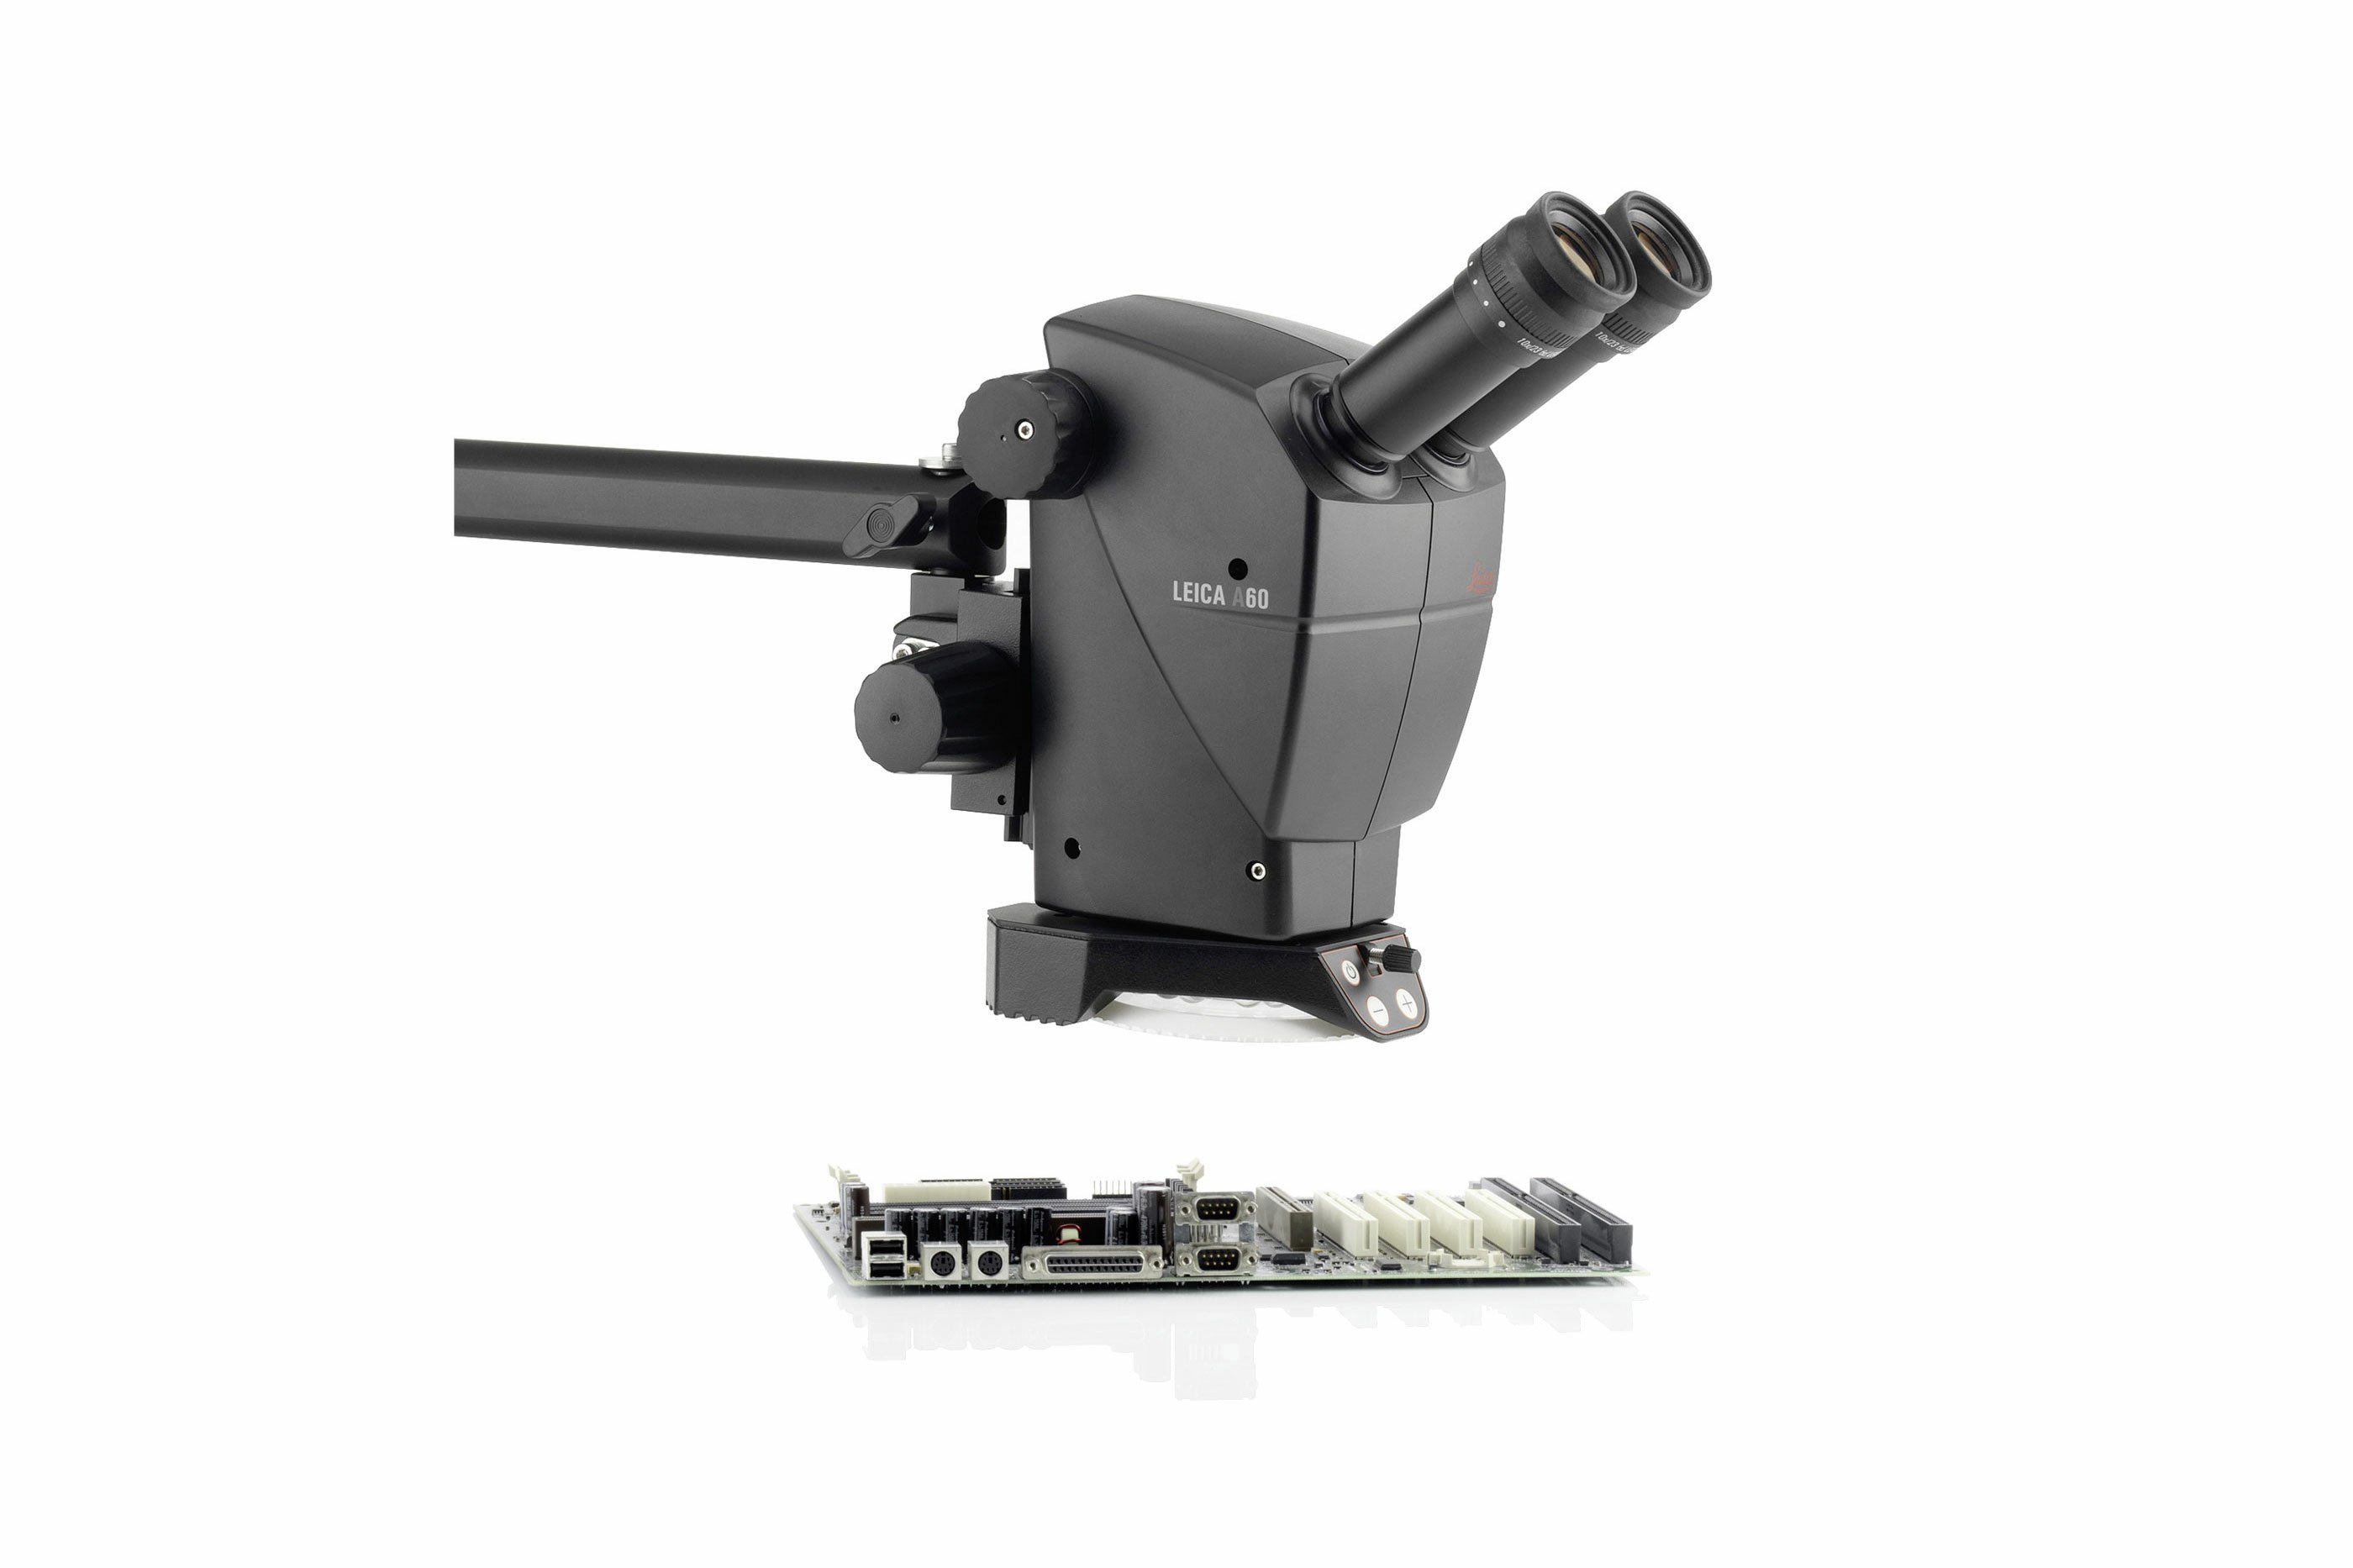 Microscópio estéreo industrial Leica A60. Os distribuidores australianos são IDM Instruments